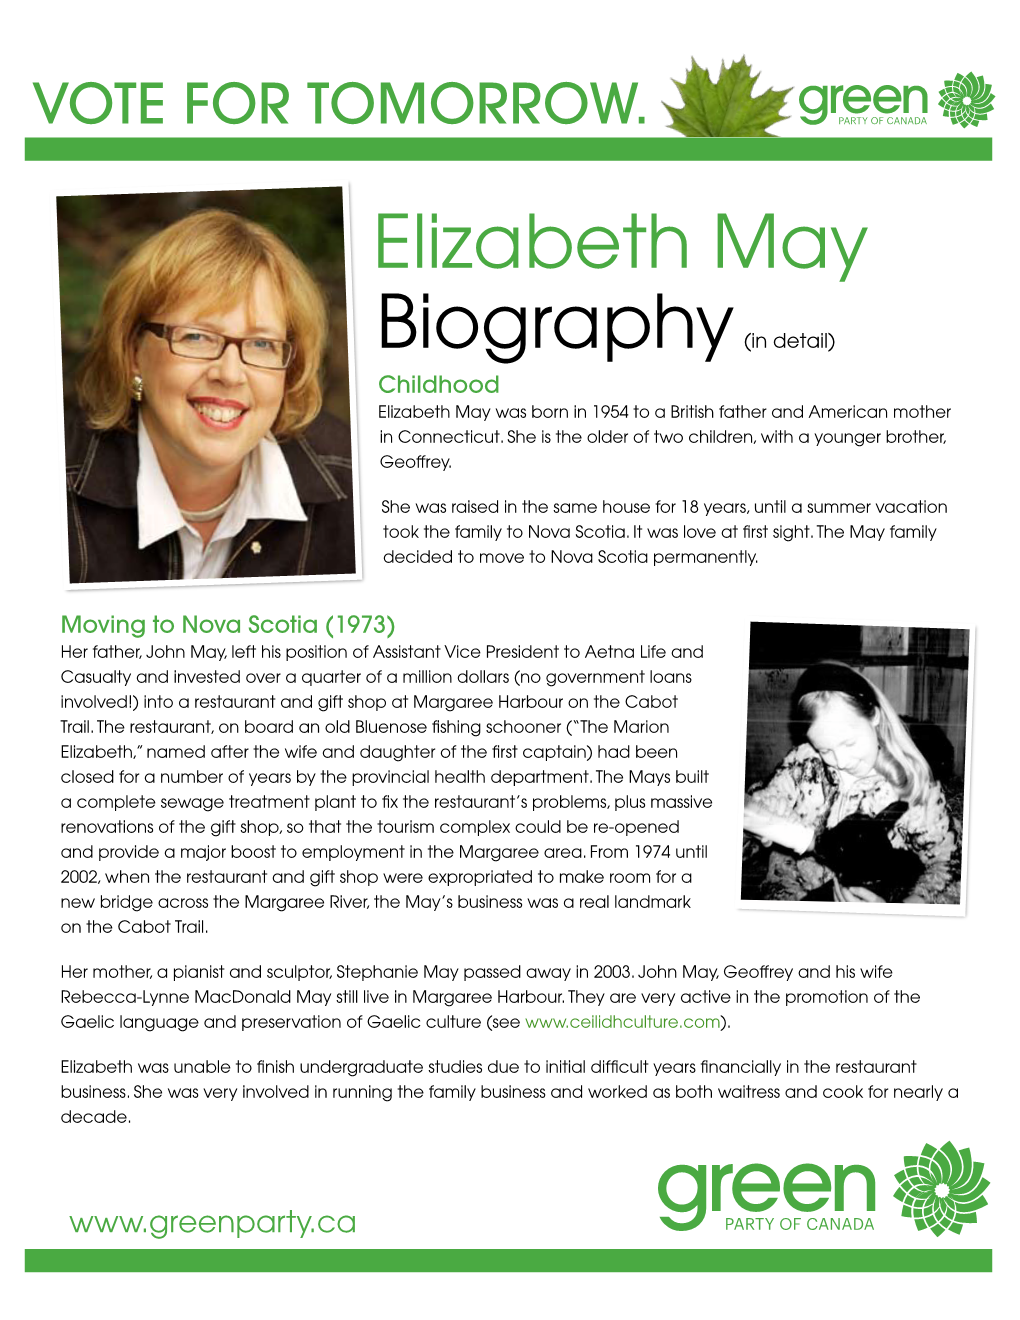 Elizabeth May